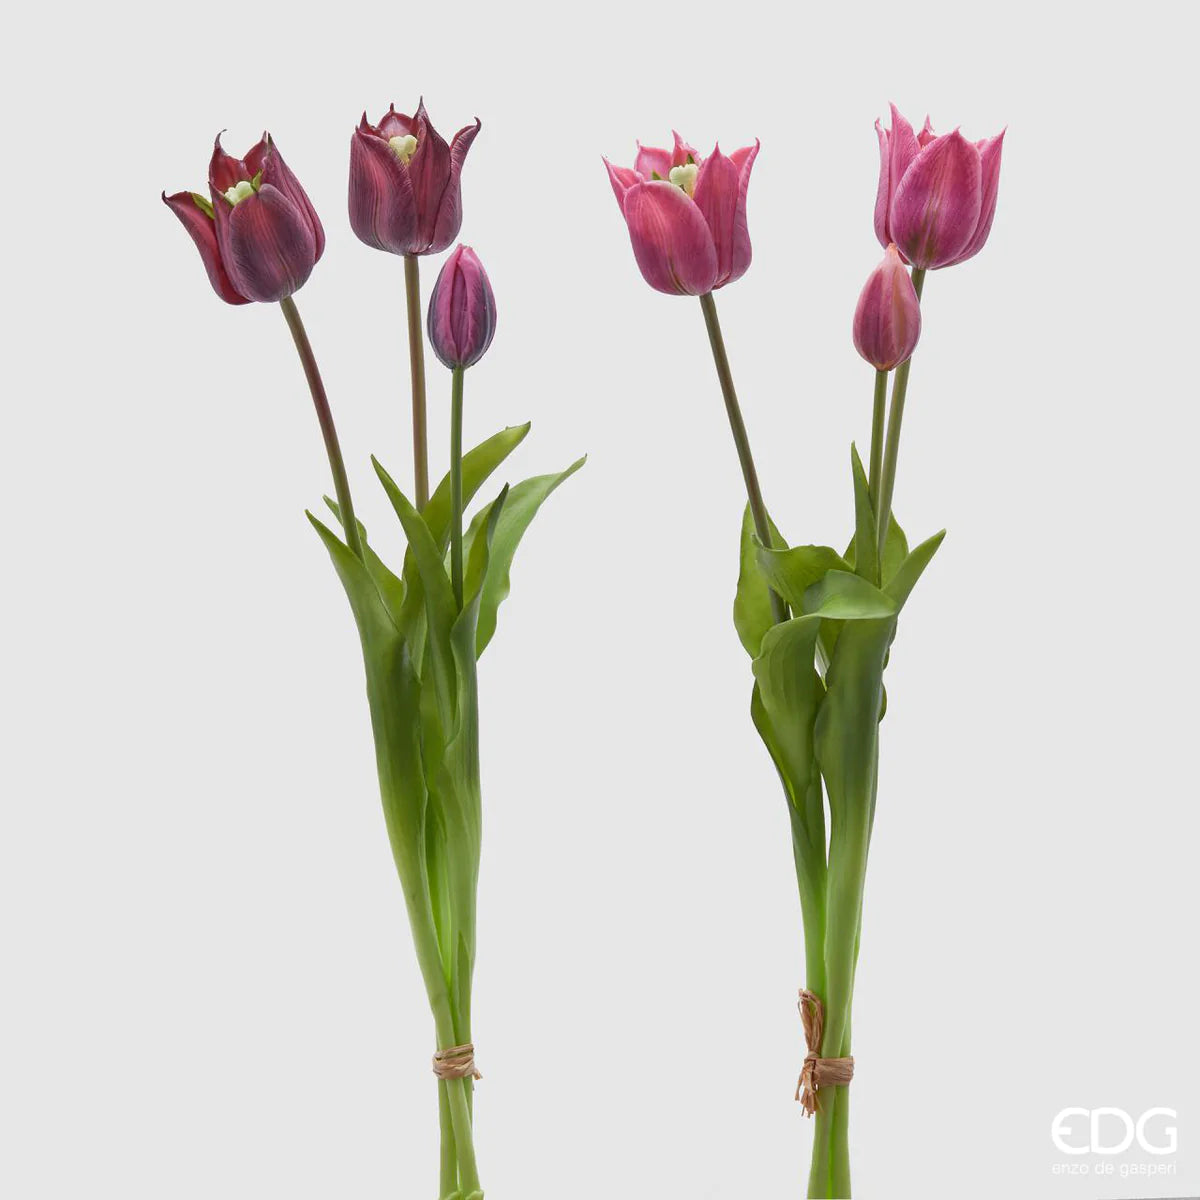 EDG - Mazzo Tulipani Olis 3 Fiori Sfumature Viola